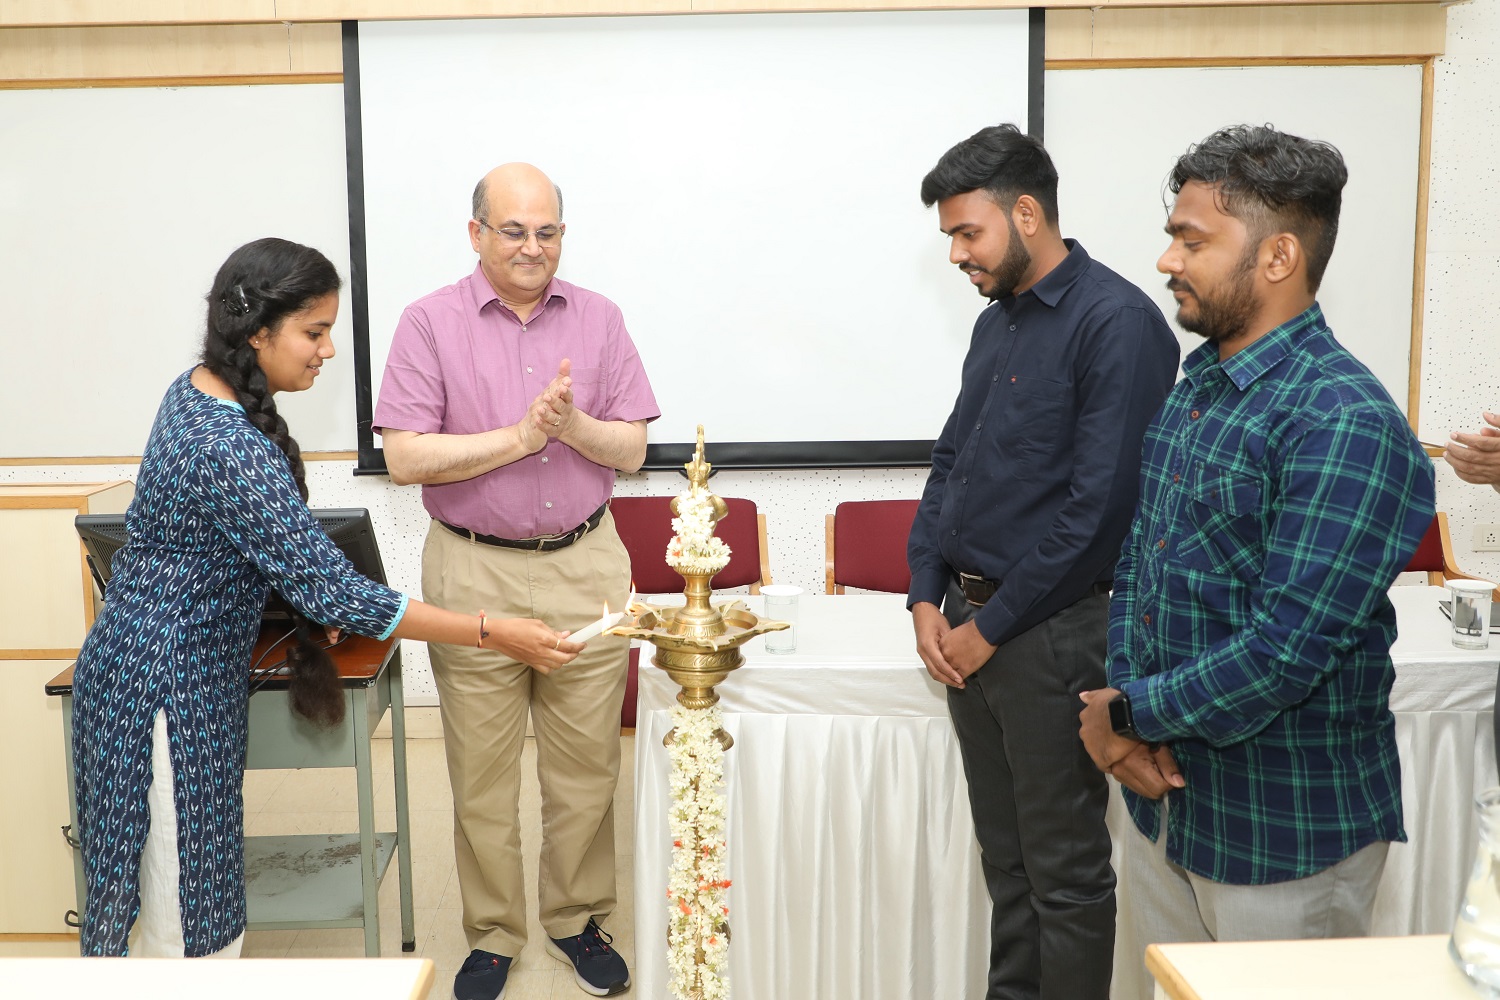 A Pre-doctoral student lights the lamp at the inauguration. IIMB, Prof. Rishikesha T Krishnan, Director, IIMB, applaud.